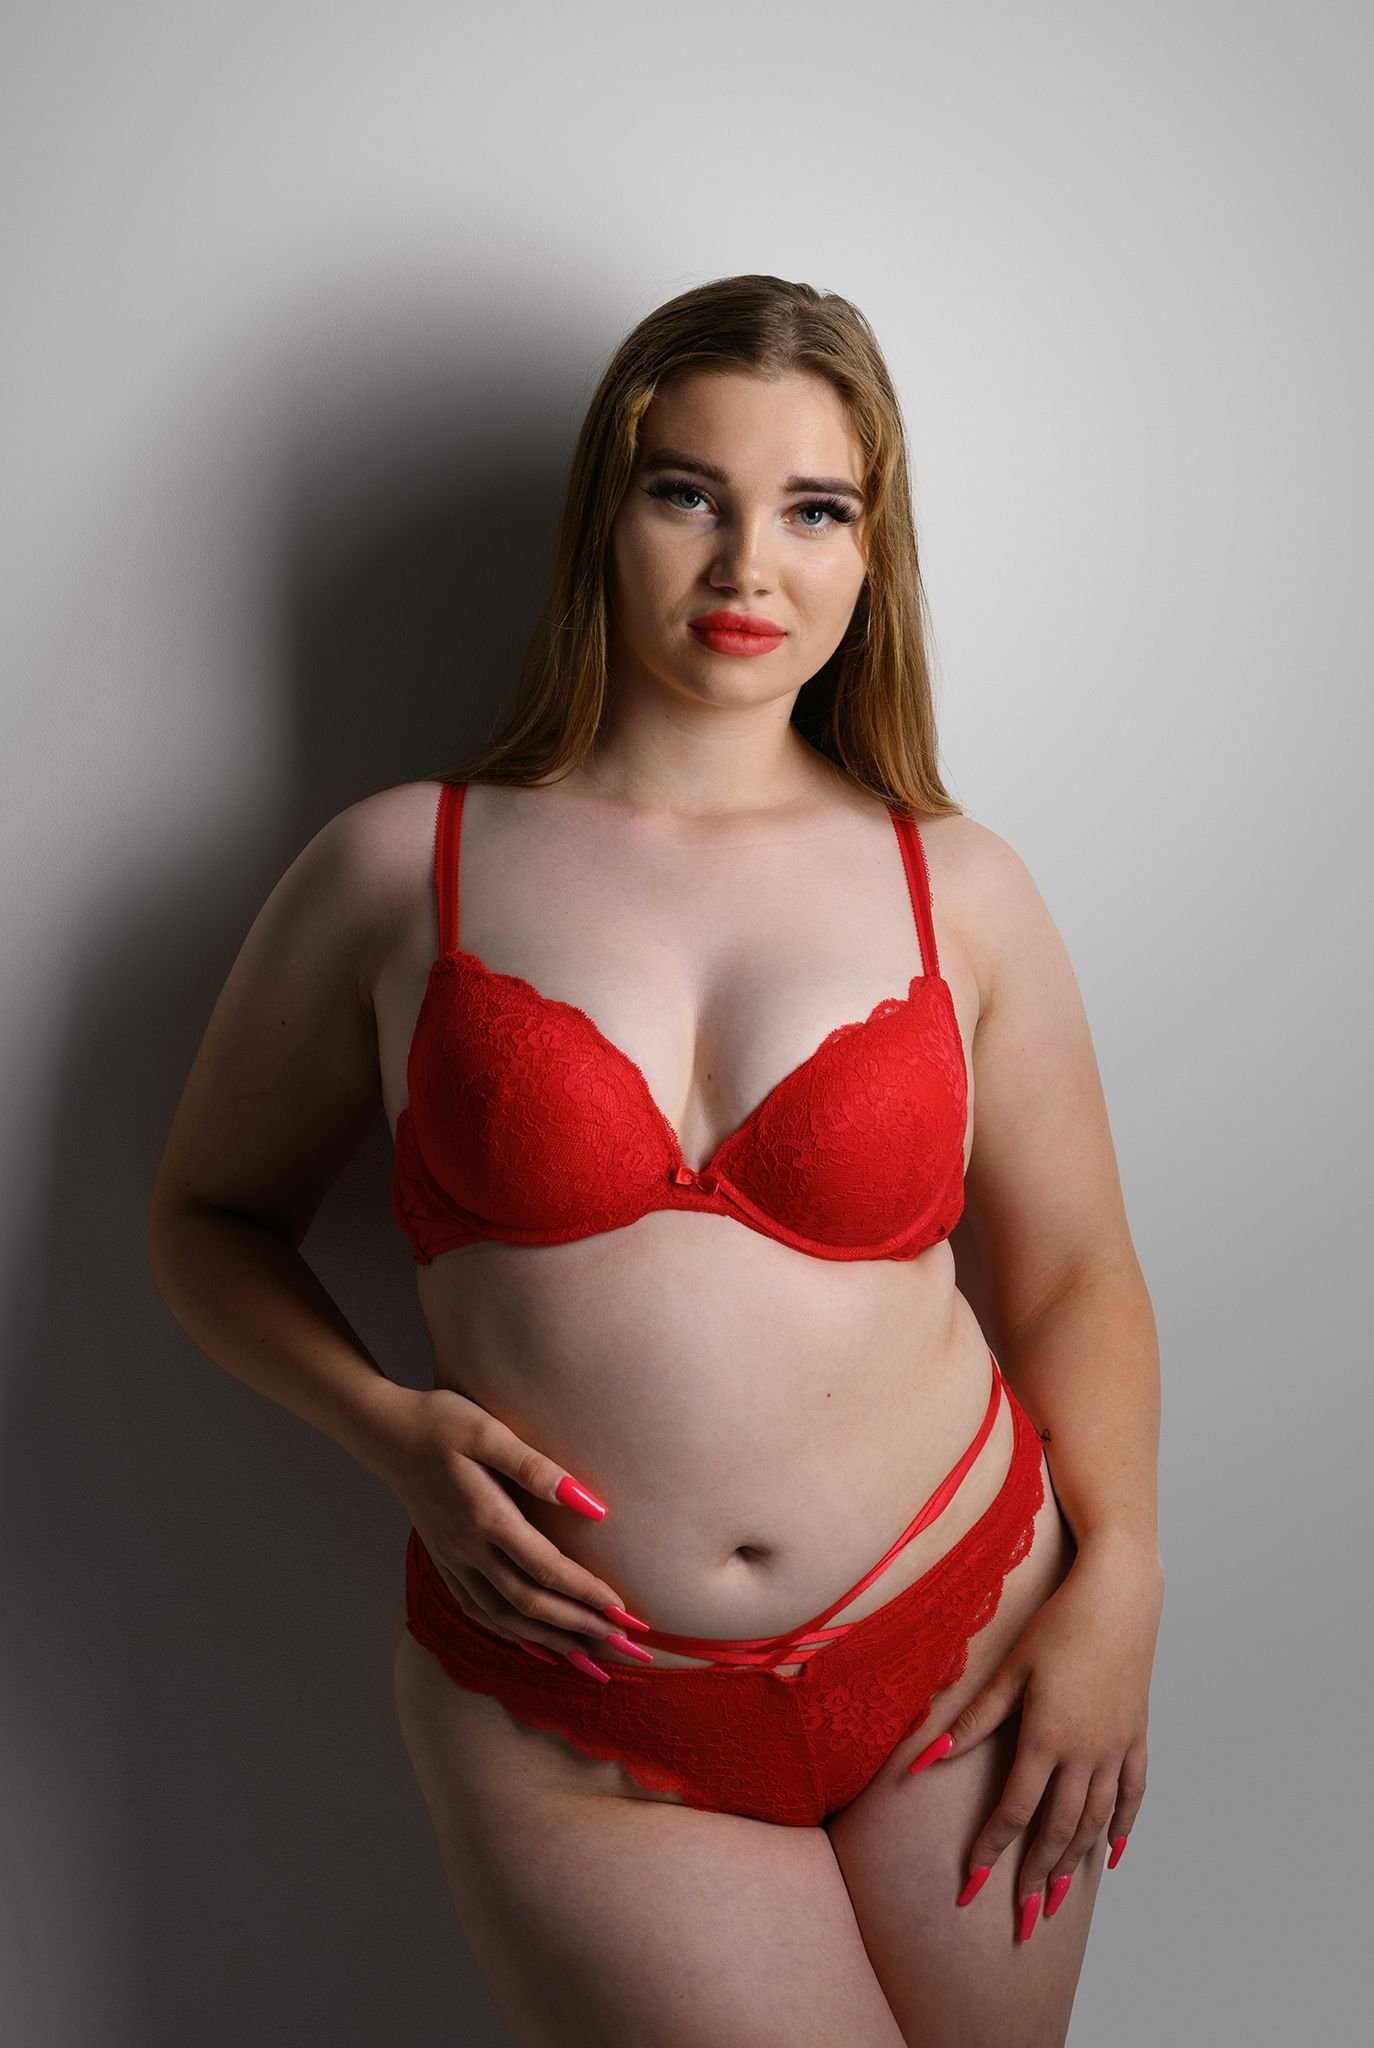 Meet Amazing Sexy Laura7: Top Escort Girl - model preview photo 2 